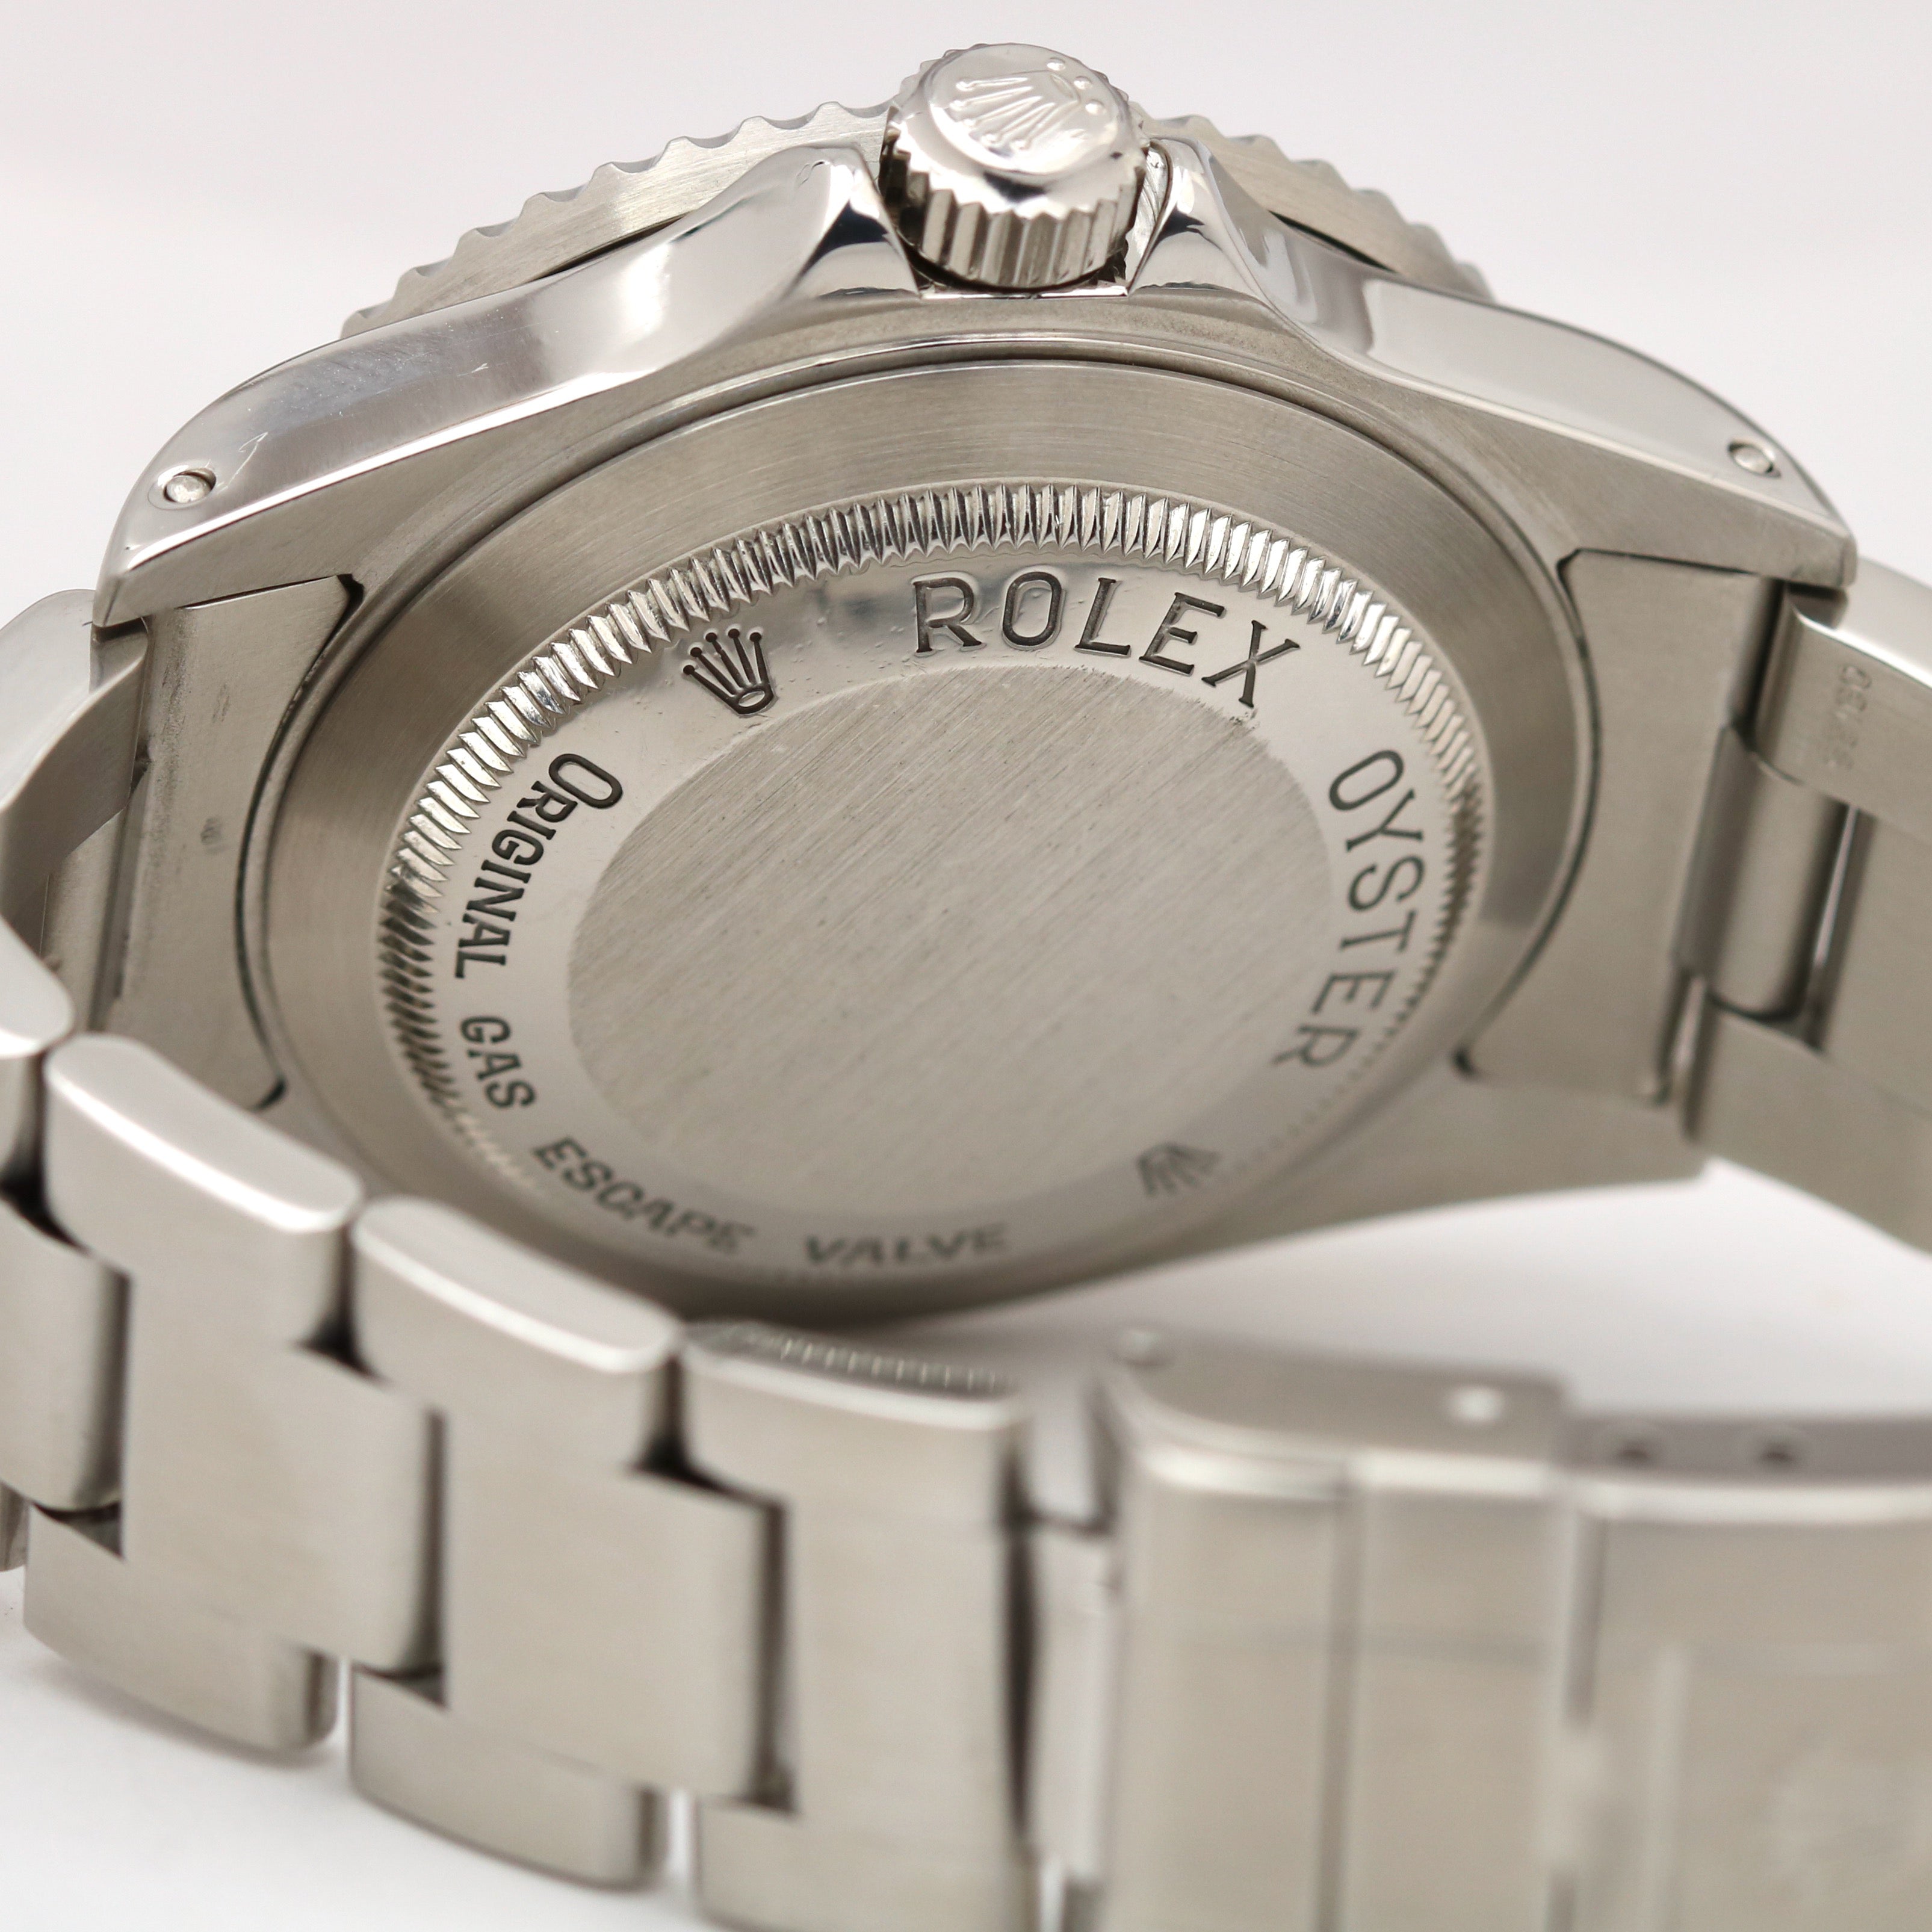 RSC Rolex Sea-Dweller 16600 40mm Stainless Steel Black Automatic Date Watch BOX